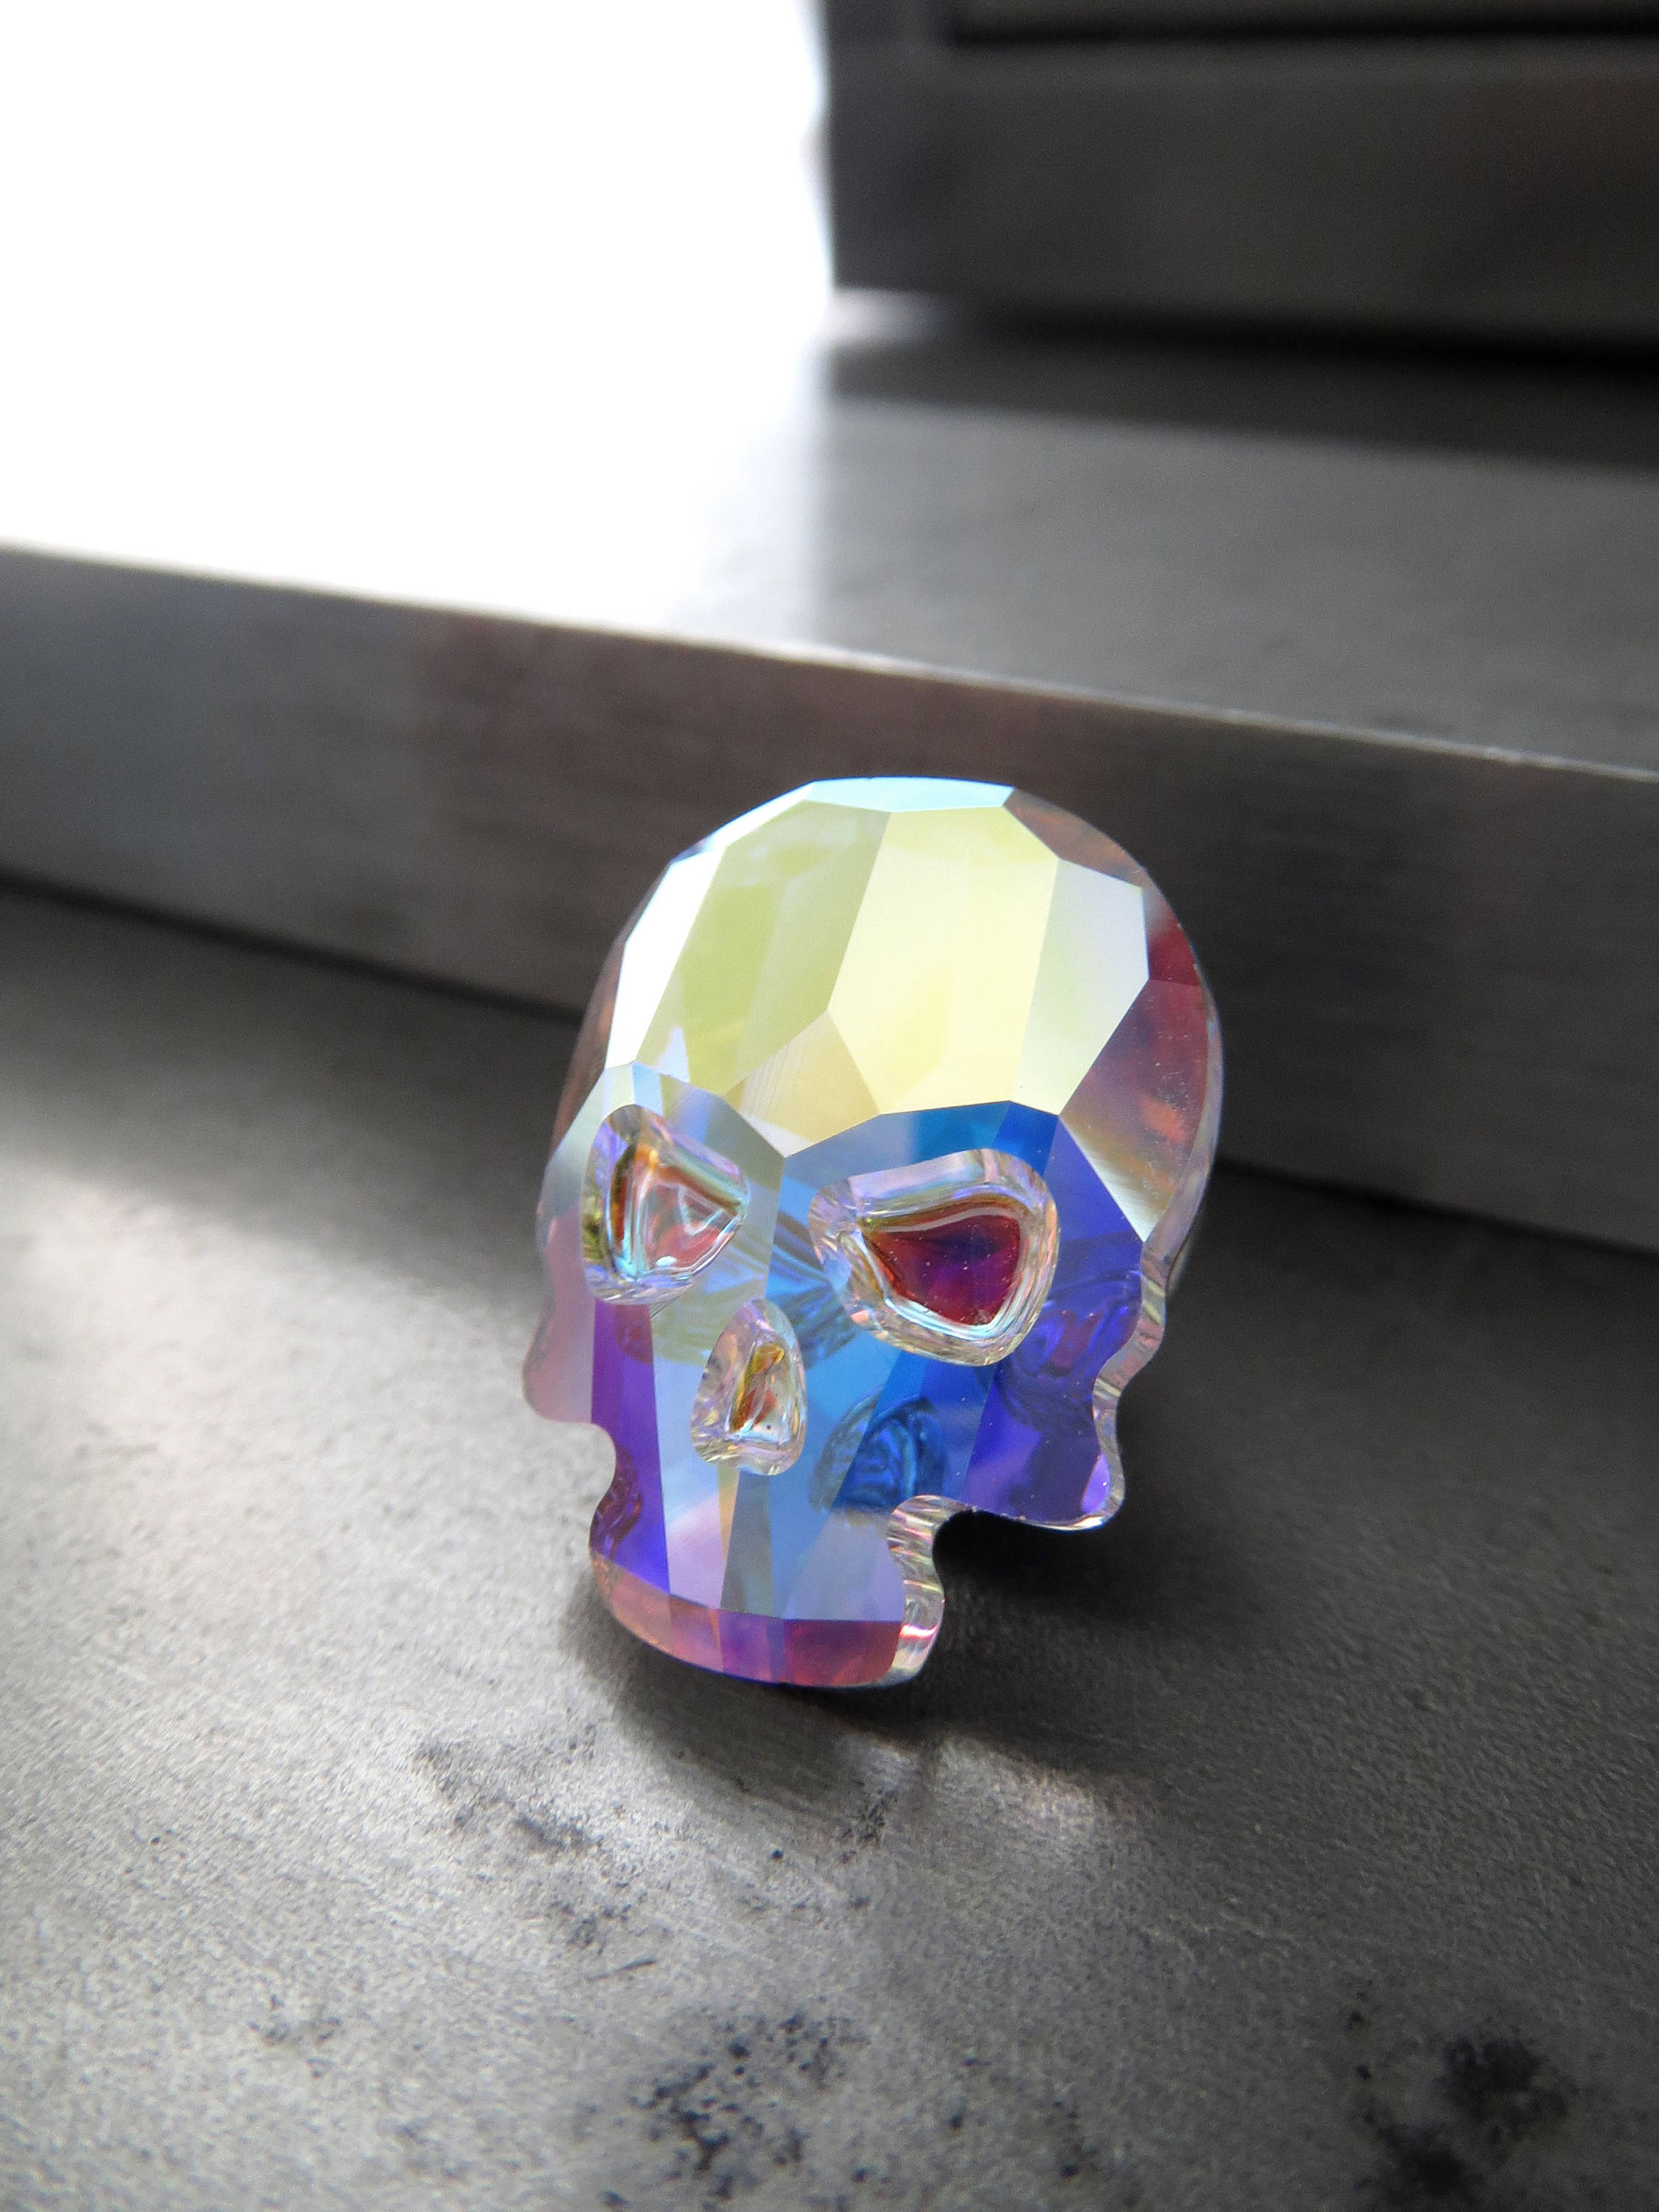 Small Sparkling Crystal Skull Pin or Magnet - Shimmer Iridescent AB